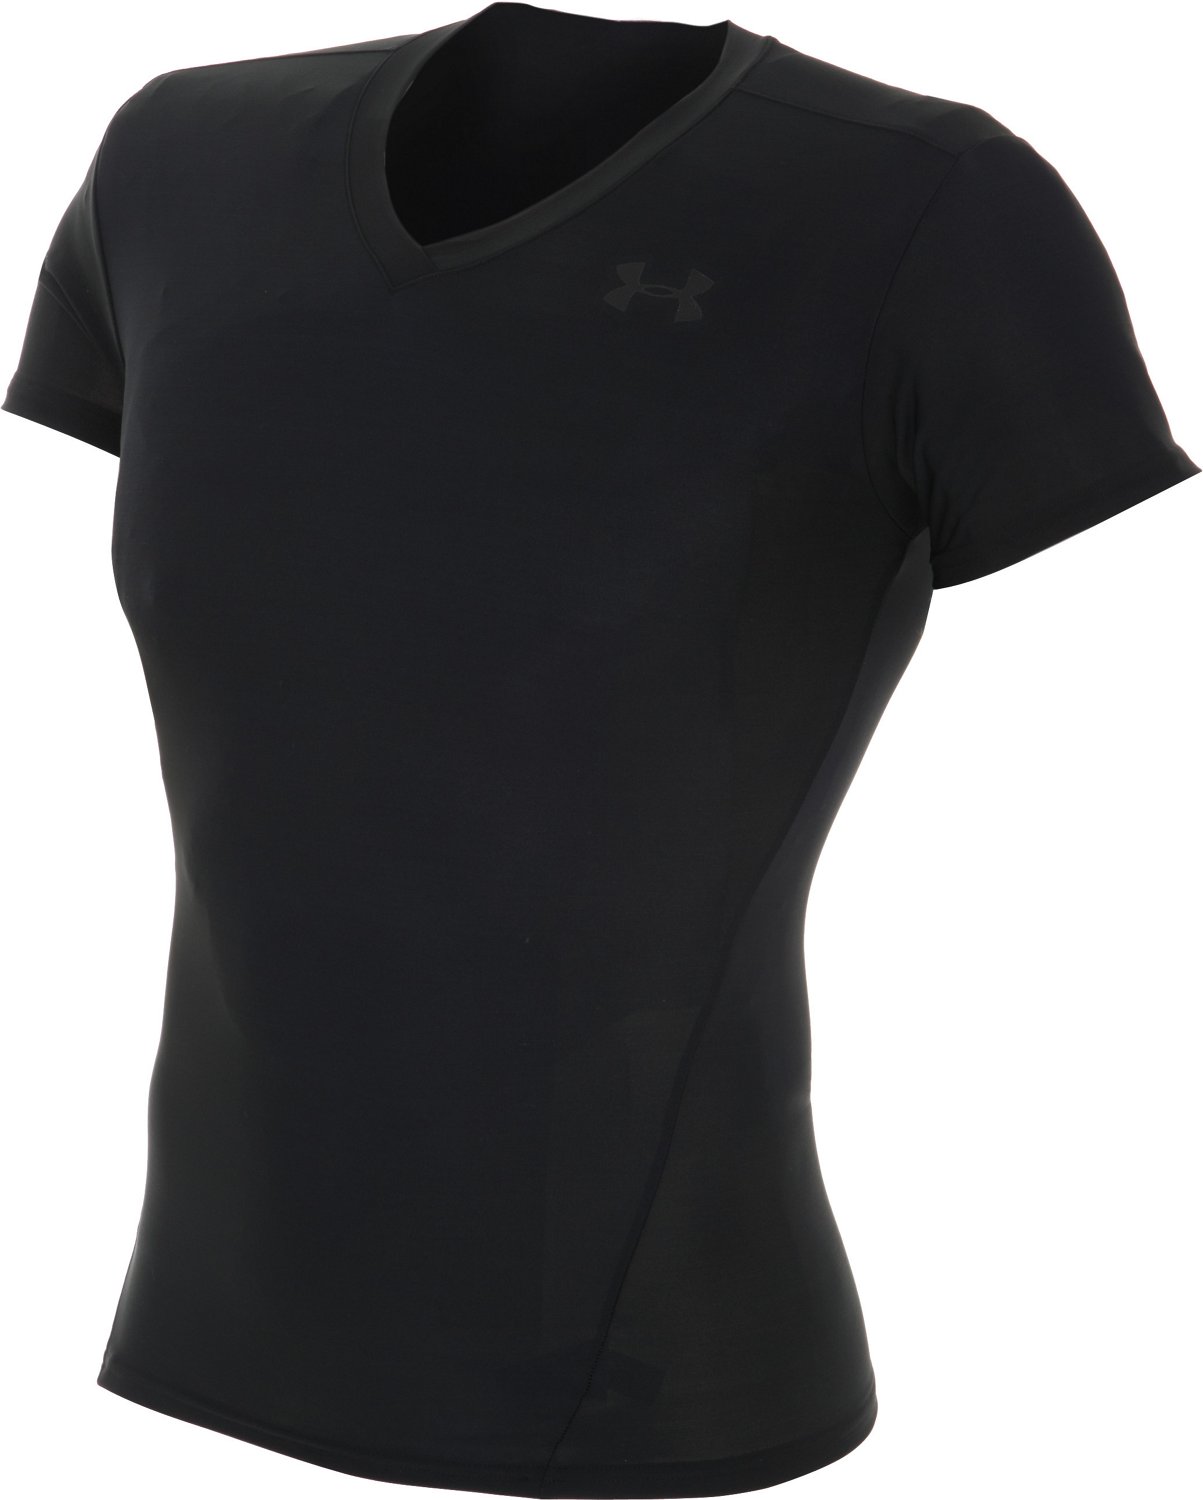 Under Armour HeatGear® Compression Short Sleeve Shirt Women - Black/White